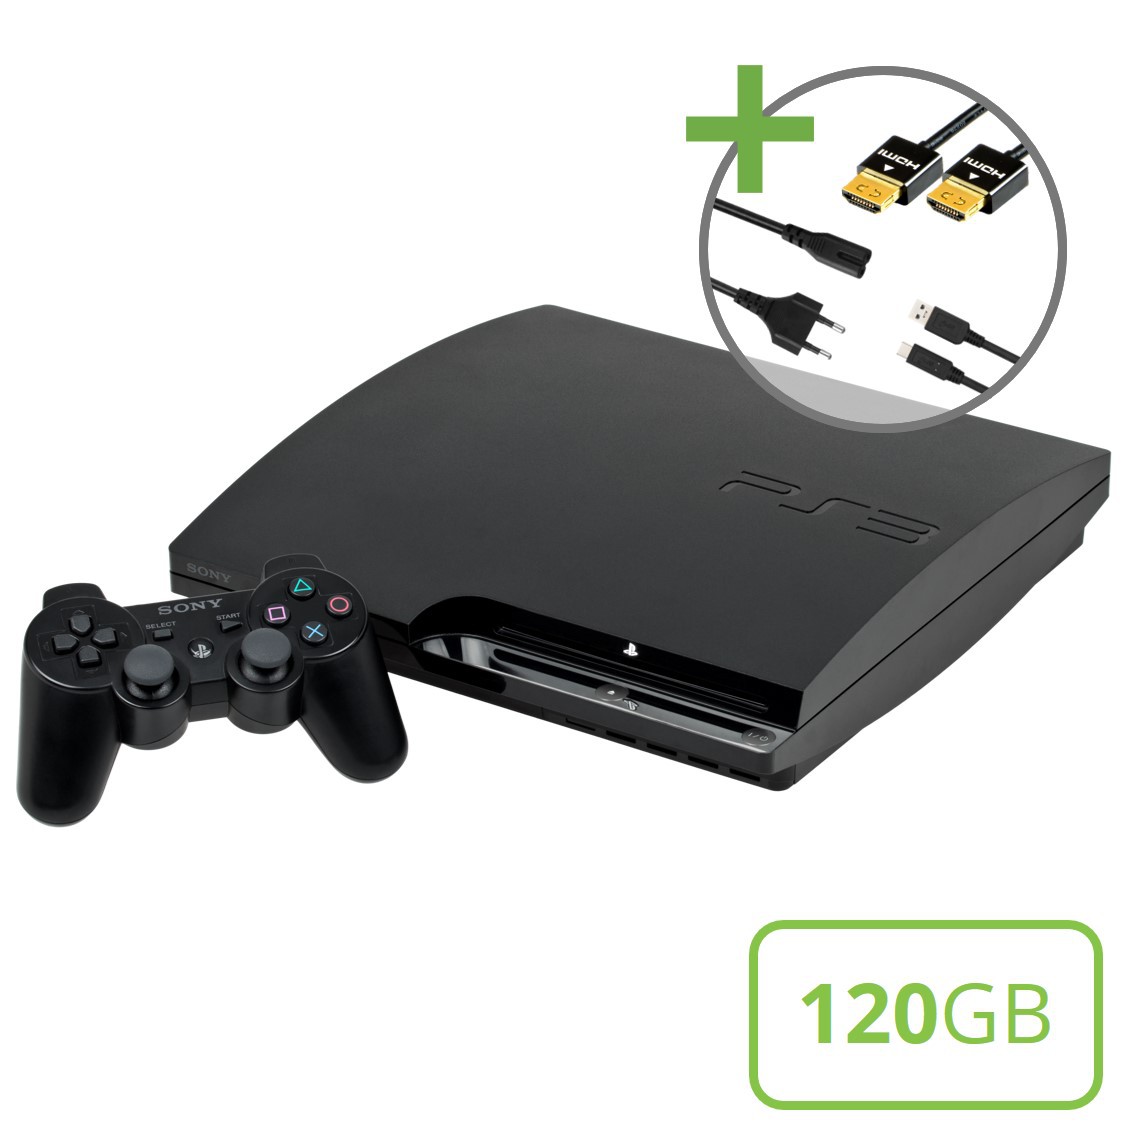 Sony PlayStation 3 Slim (120GB) Starter Pack - DualShock Edition - Playstation 3 Hardware